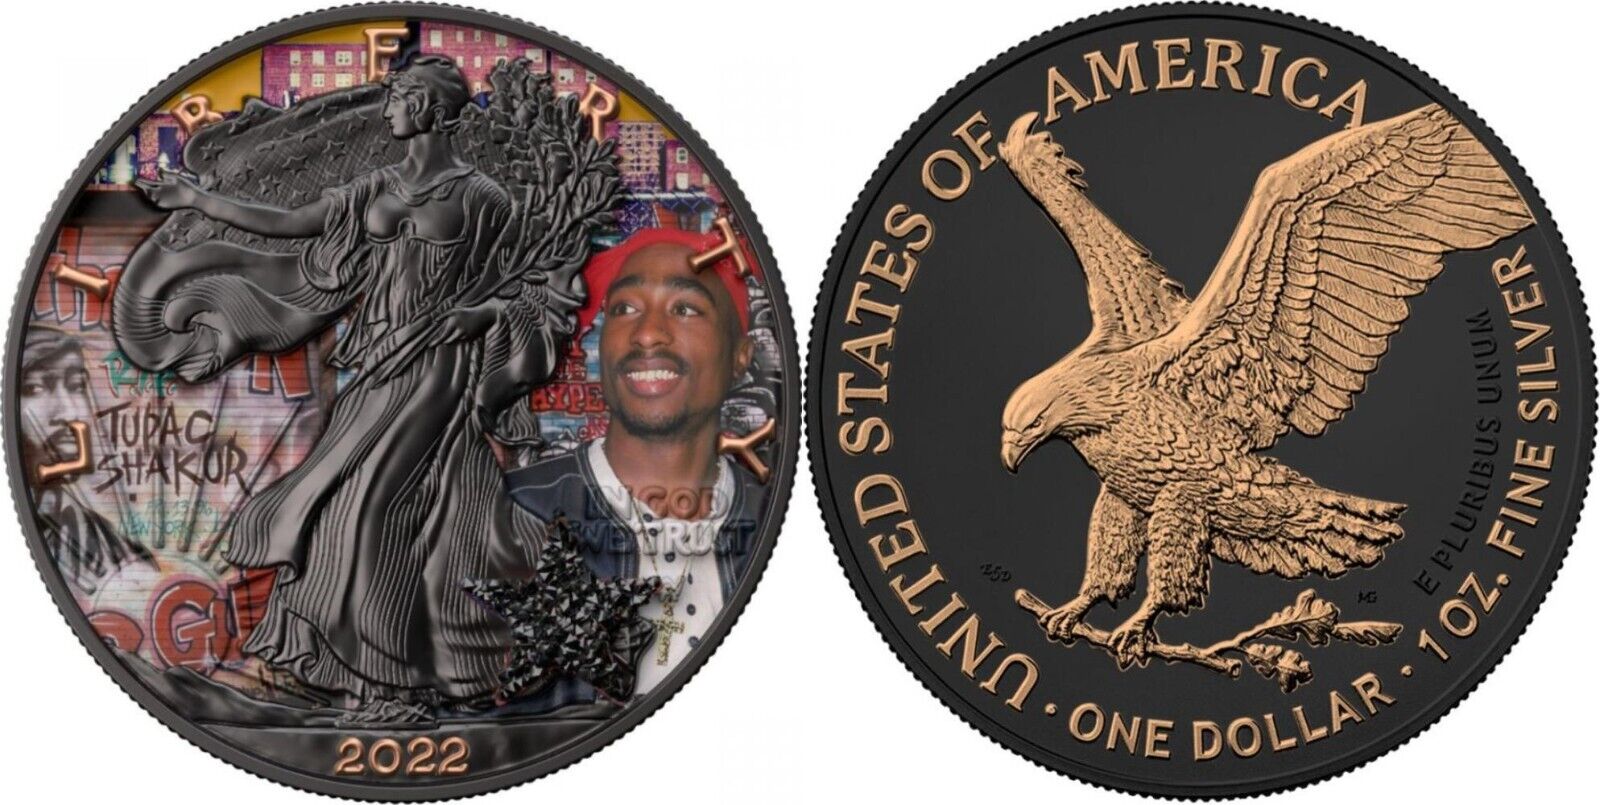 1 Oz Silver Coin 2022 $1 Liberty Music Superstar Tupac Shakur Rapper Drusy-classypw.com-3